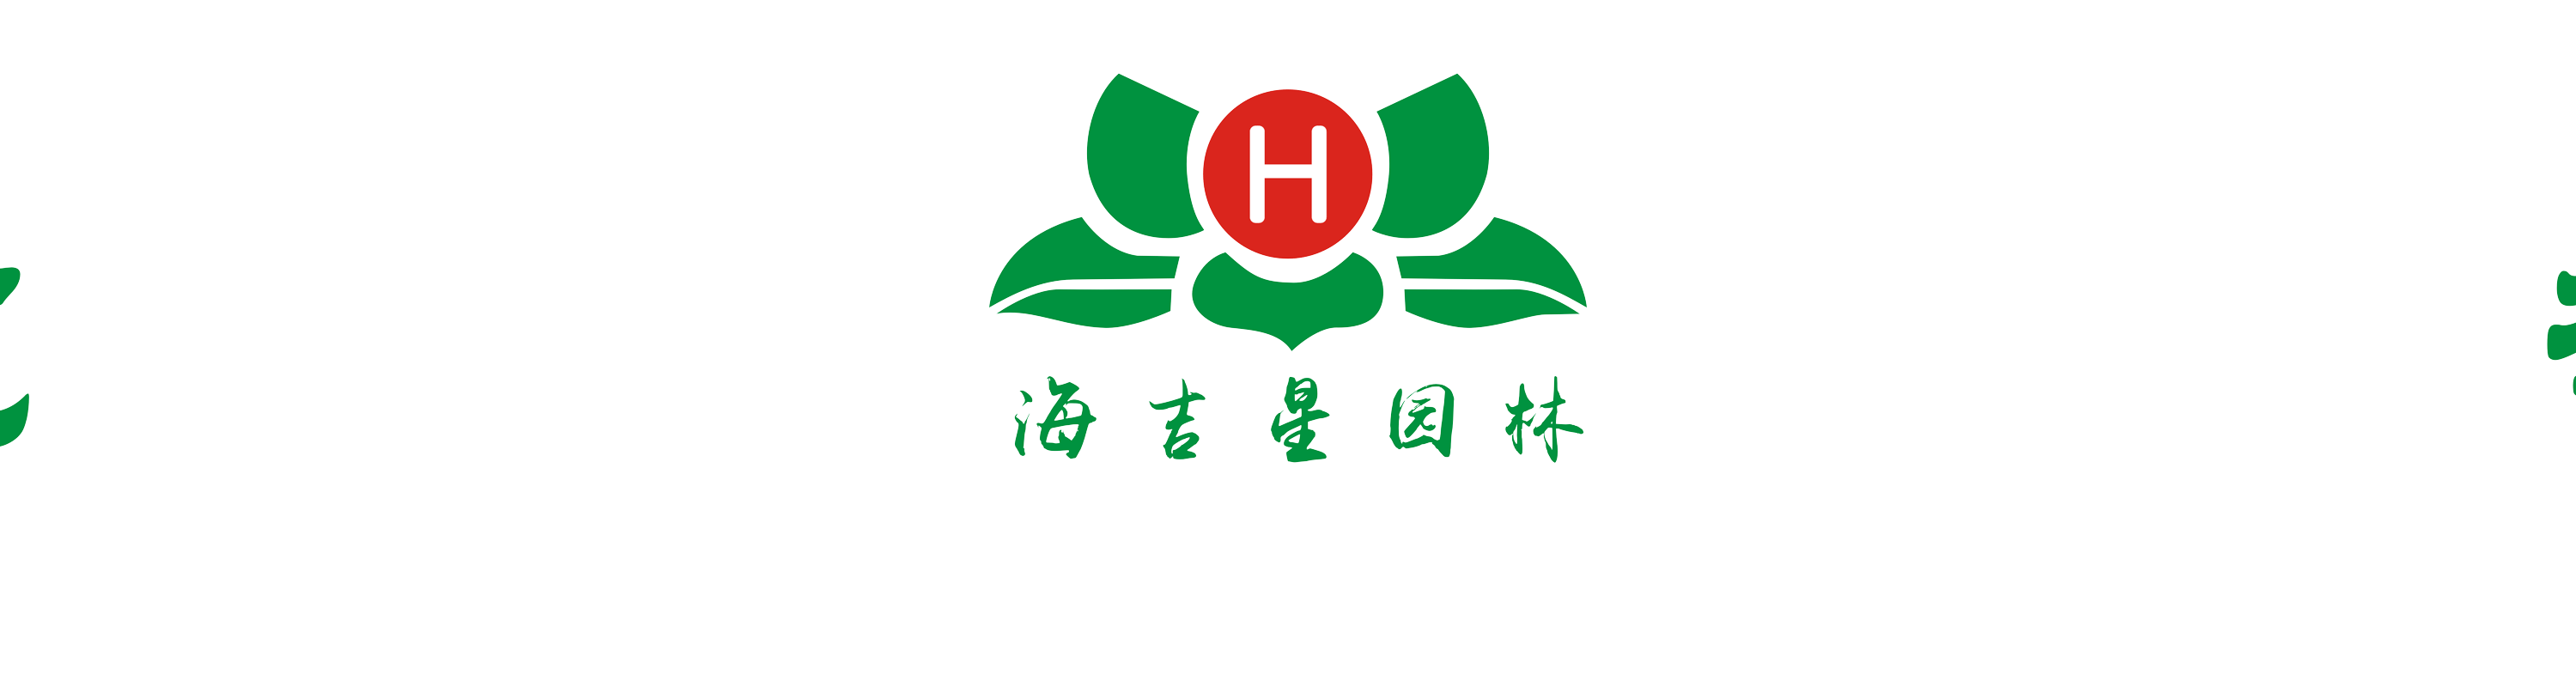 海吉星logo3.gif